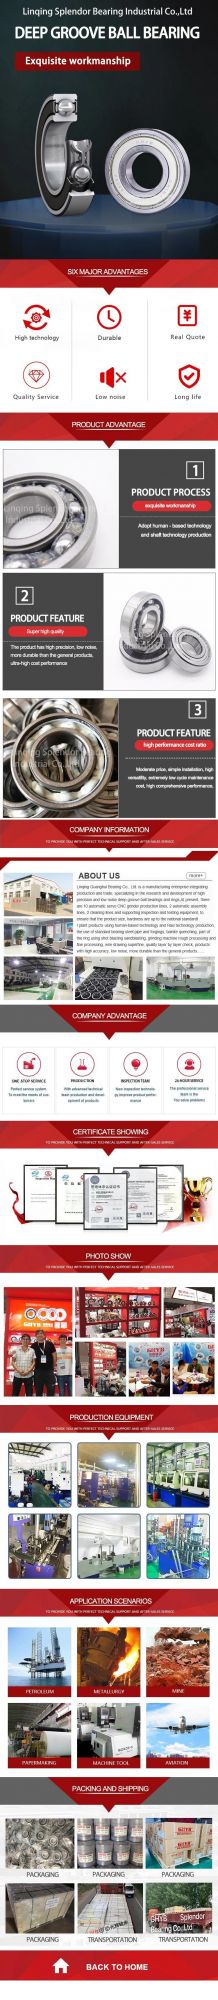 China Factory Distributor Supplier of Deep Groove Ball Bearings for Motors, Compressors, Alternators 6214-2rz/P6/Z2V2